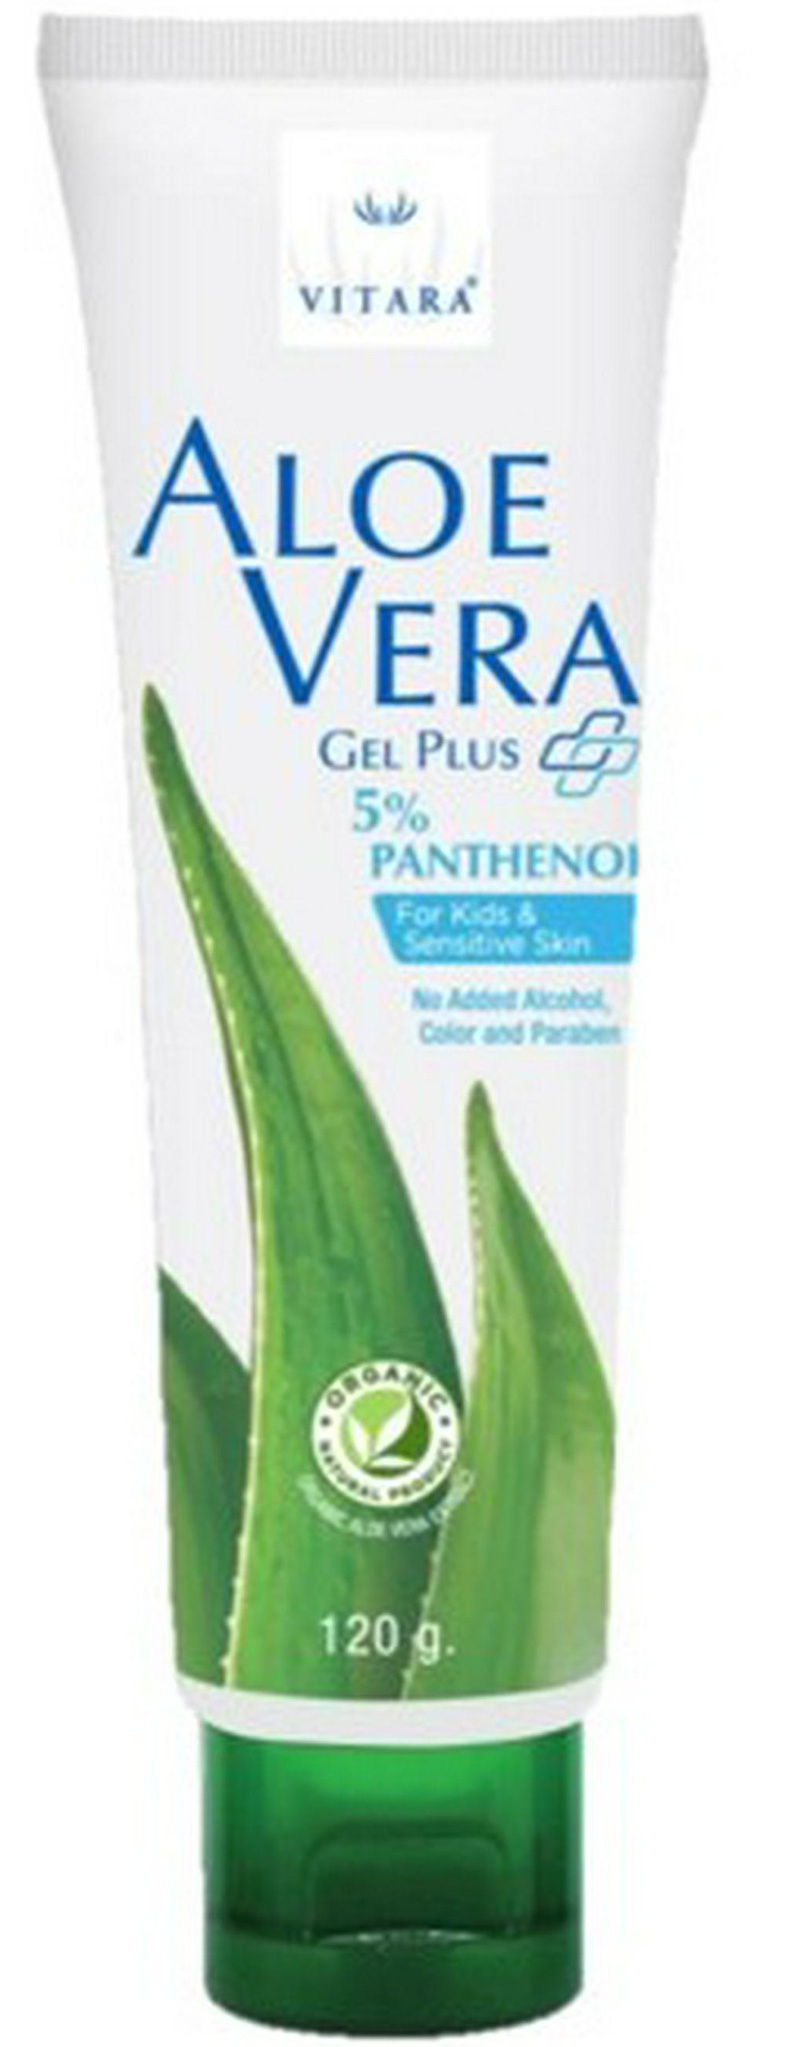 Vitara Aloe Vera Gel Plus 5% Panthenol